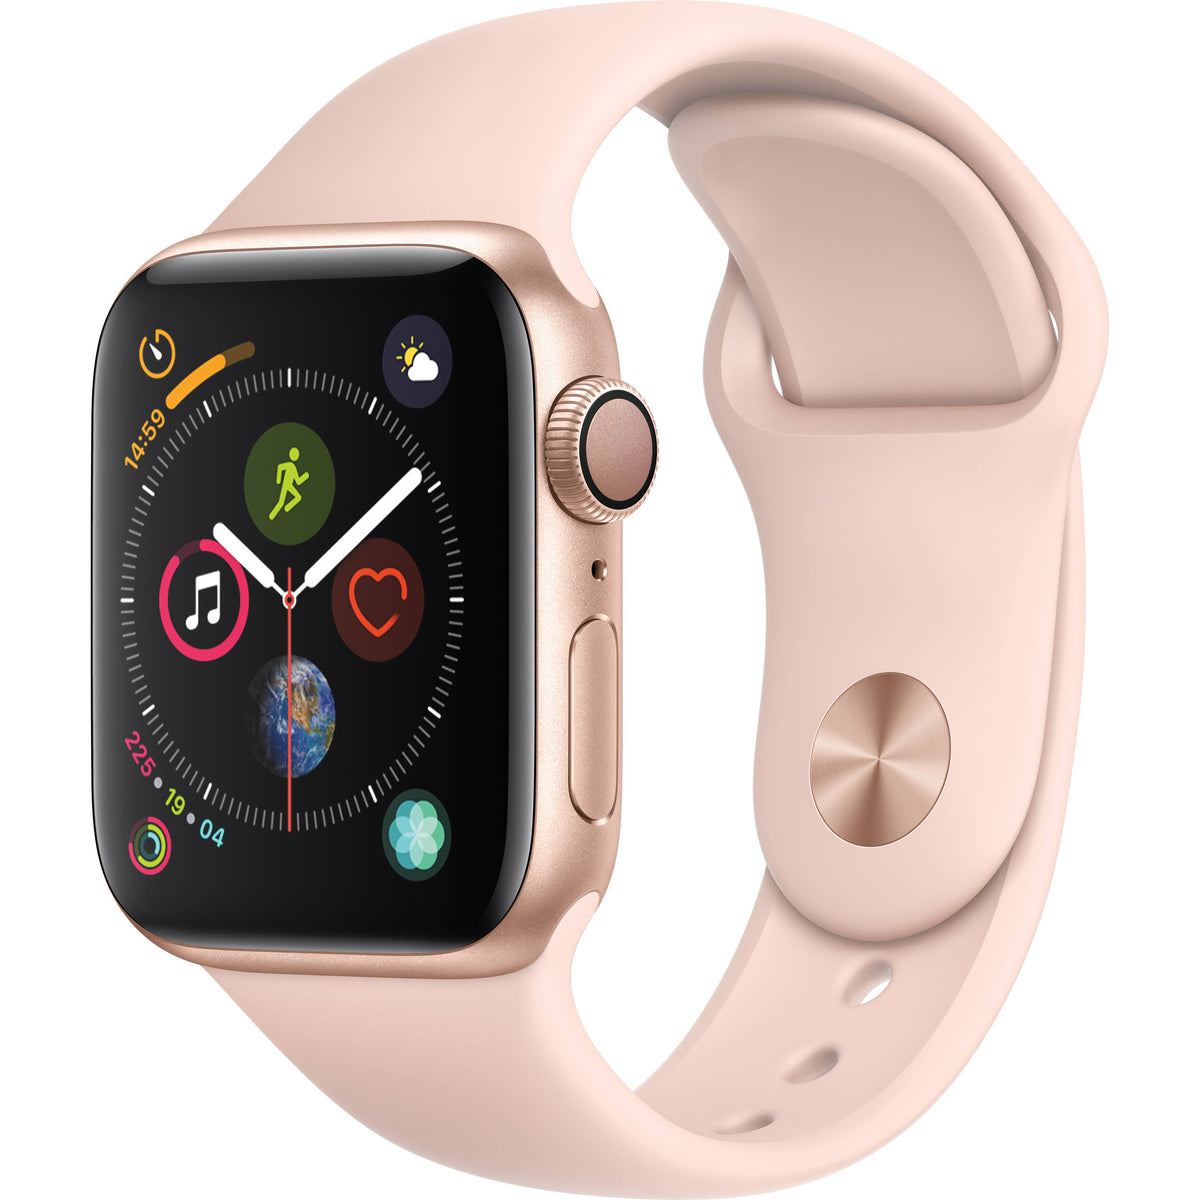 Apple Watch Series 4 – Cellular Savings